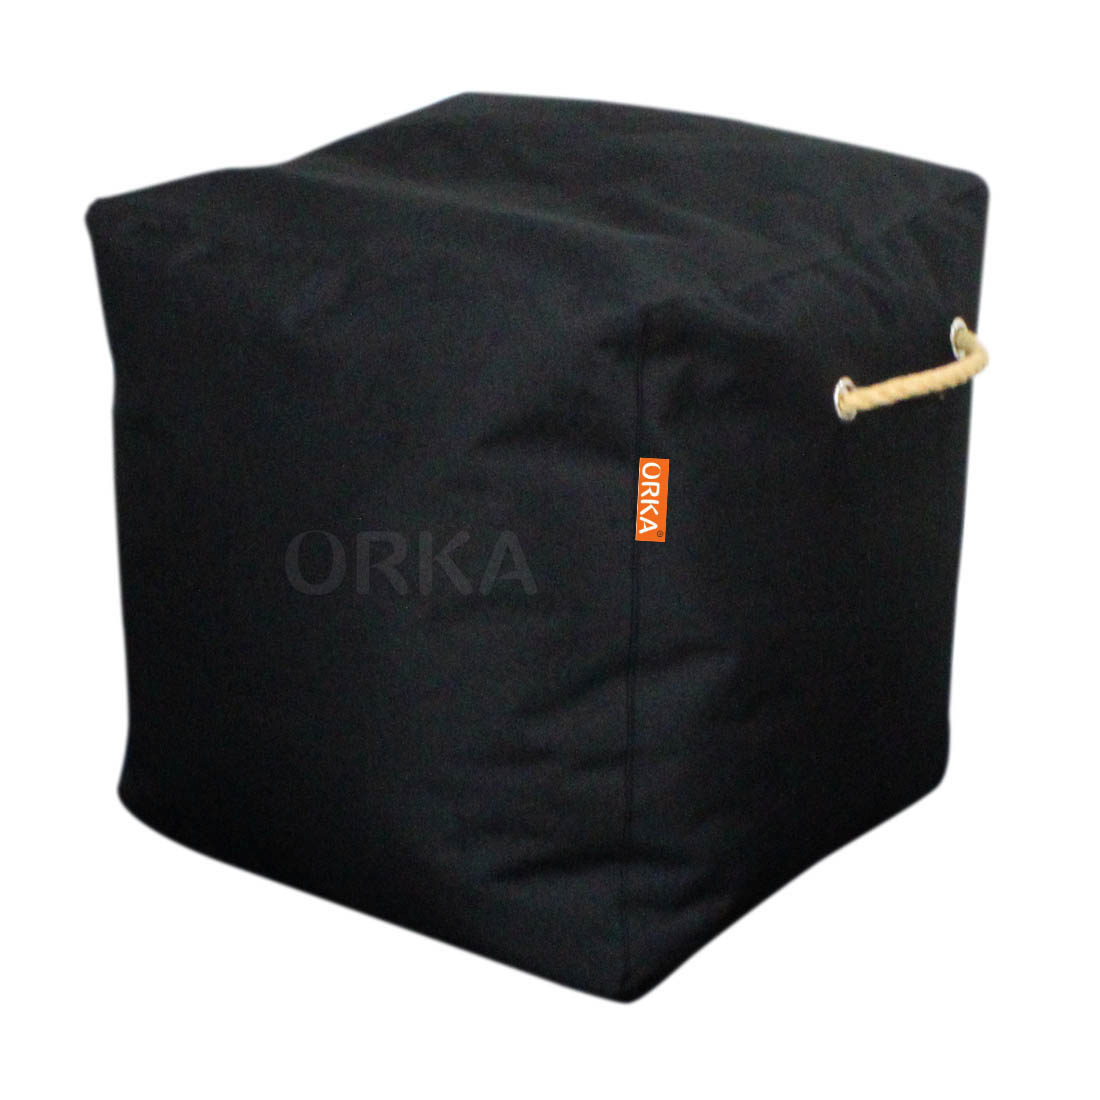 ORKA Denier Fabric 18 X 18 Inch Premium Pouf With Beans - Black  